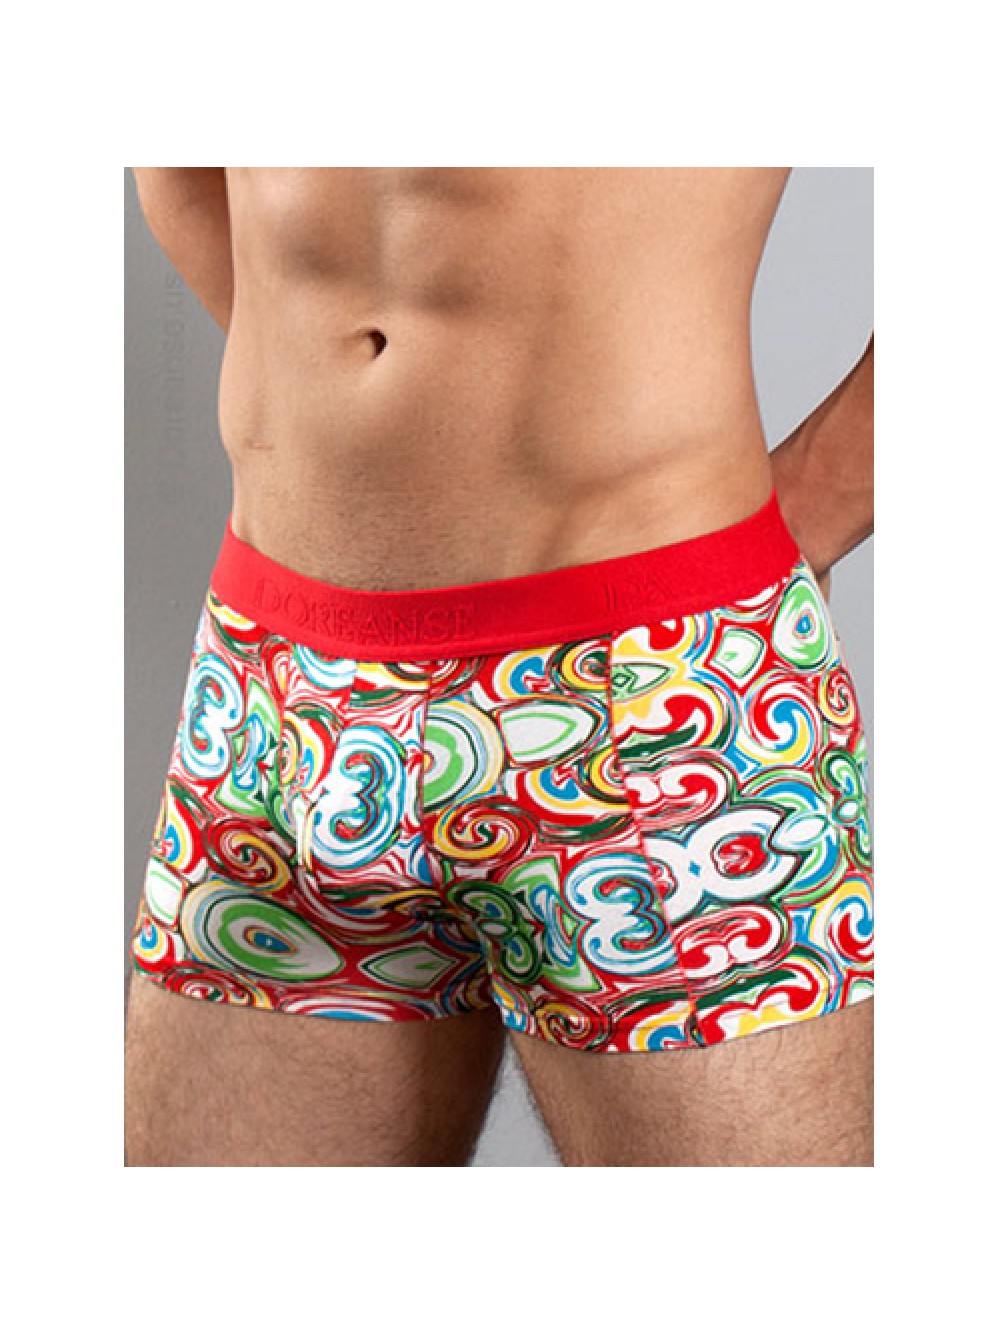 Men's Boxer shorts - Printed 8697694205945